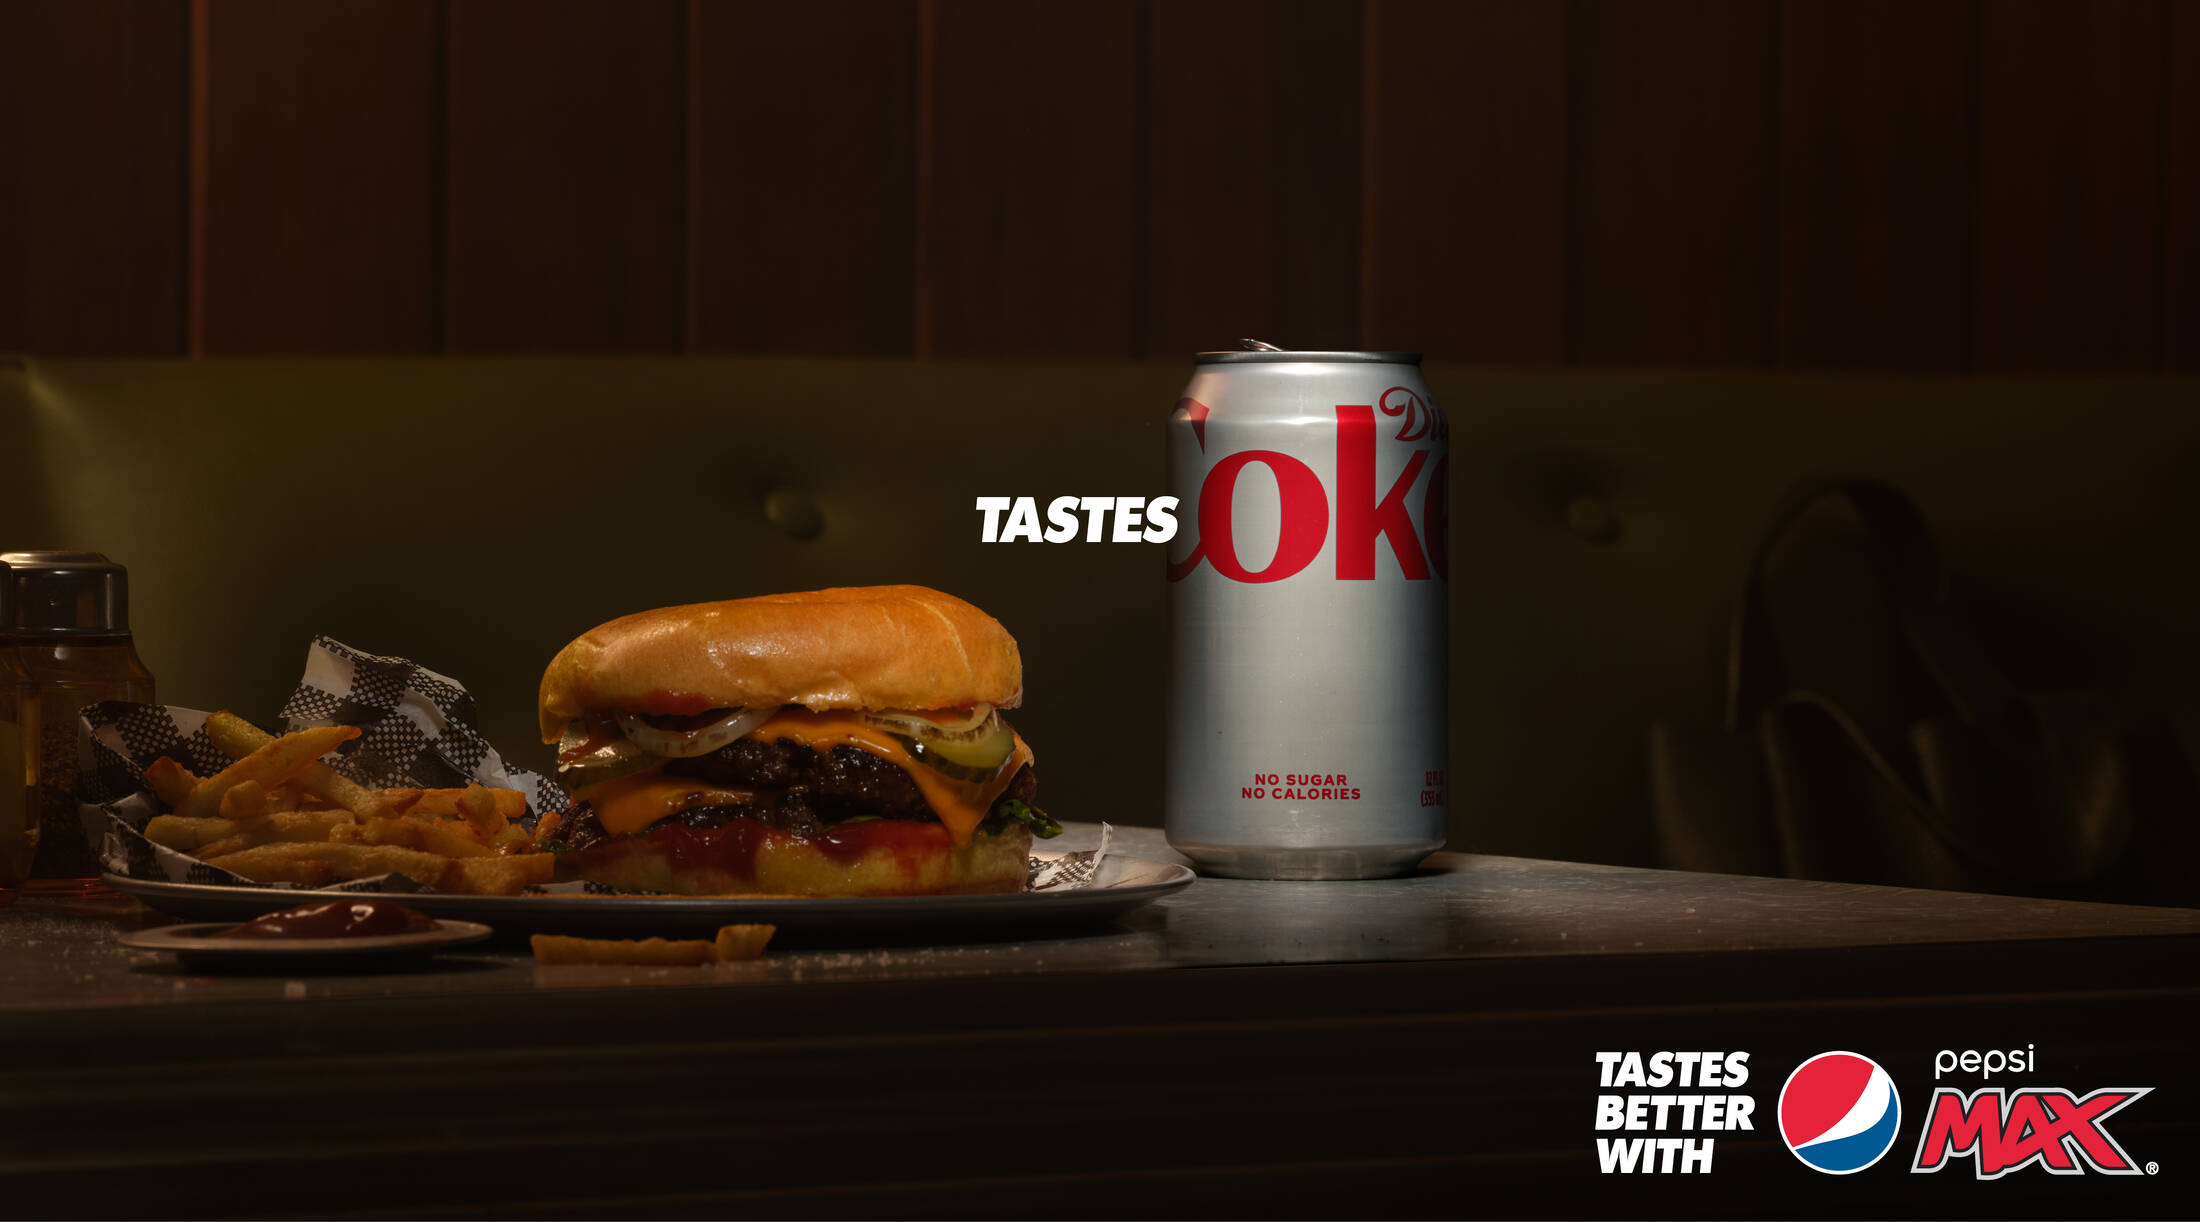 Burger tastes OK with Coke. Taste better with Pepsi Max